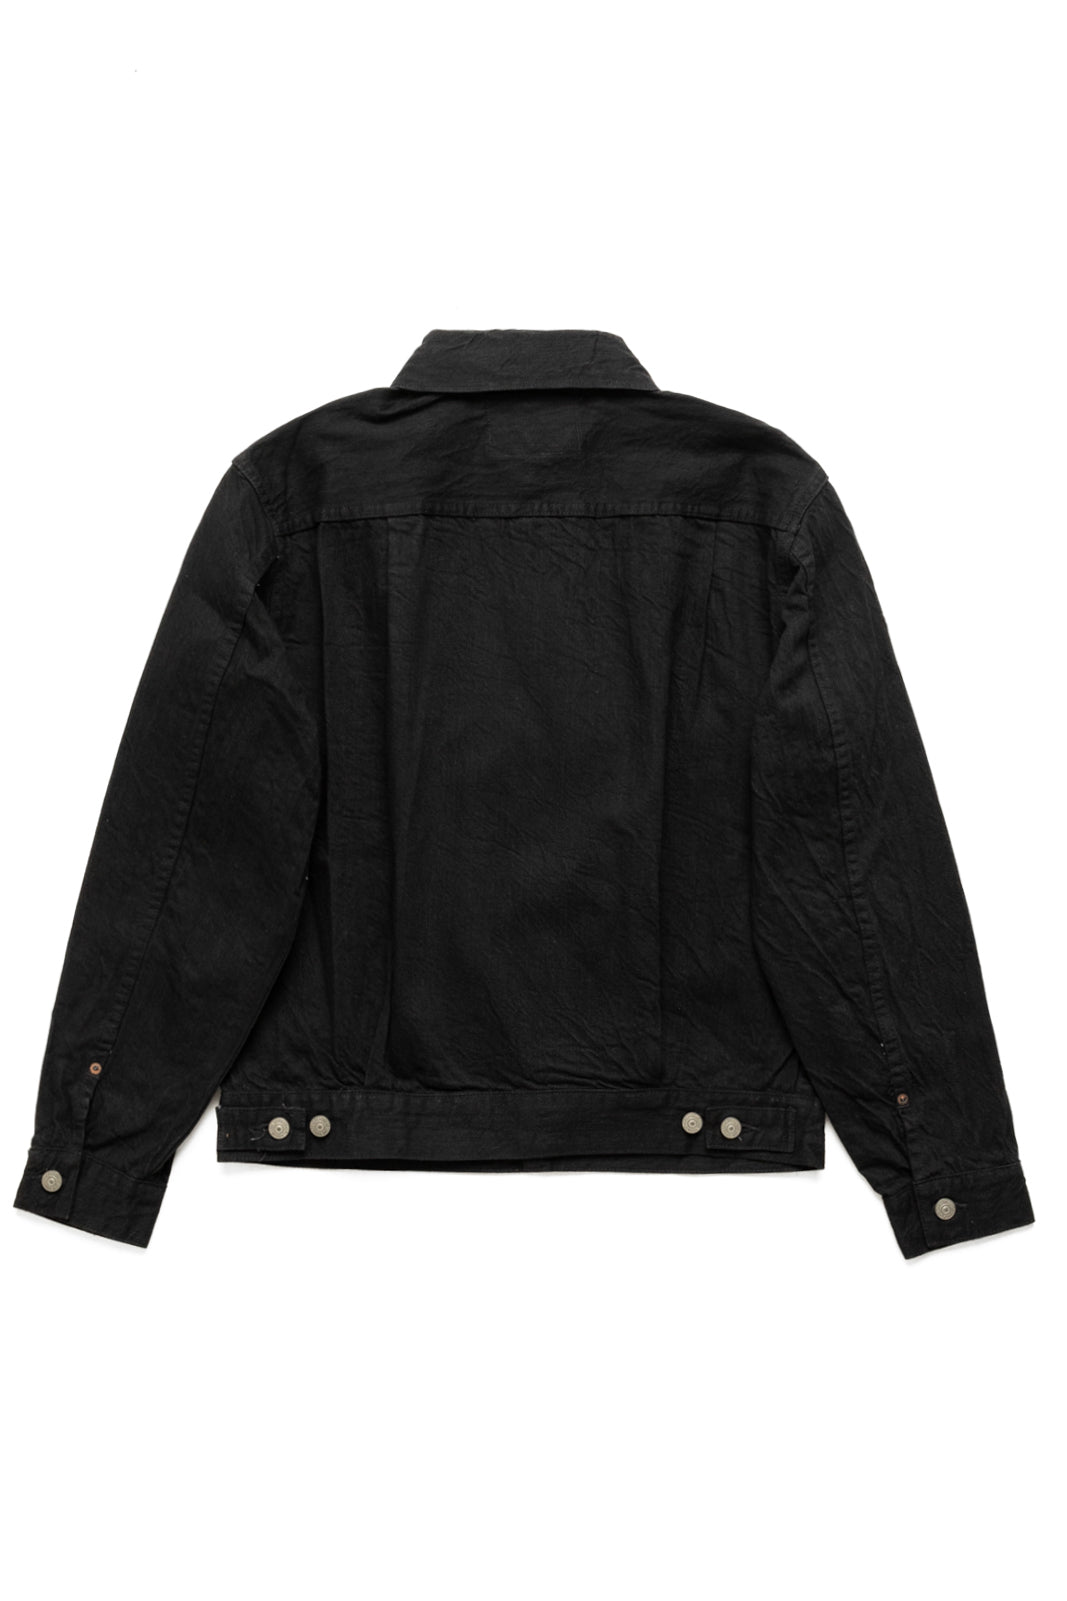 13oz Black Denim Jacket 1953 Model